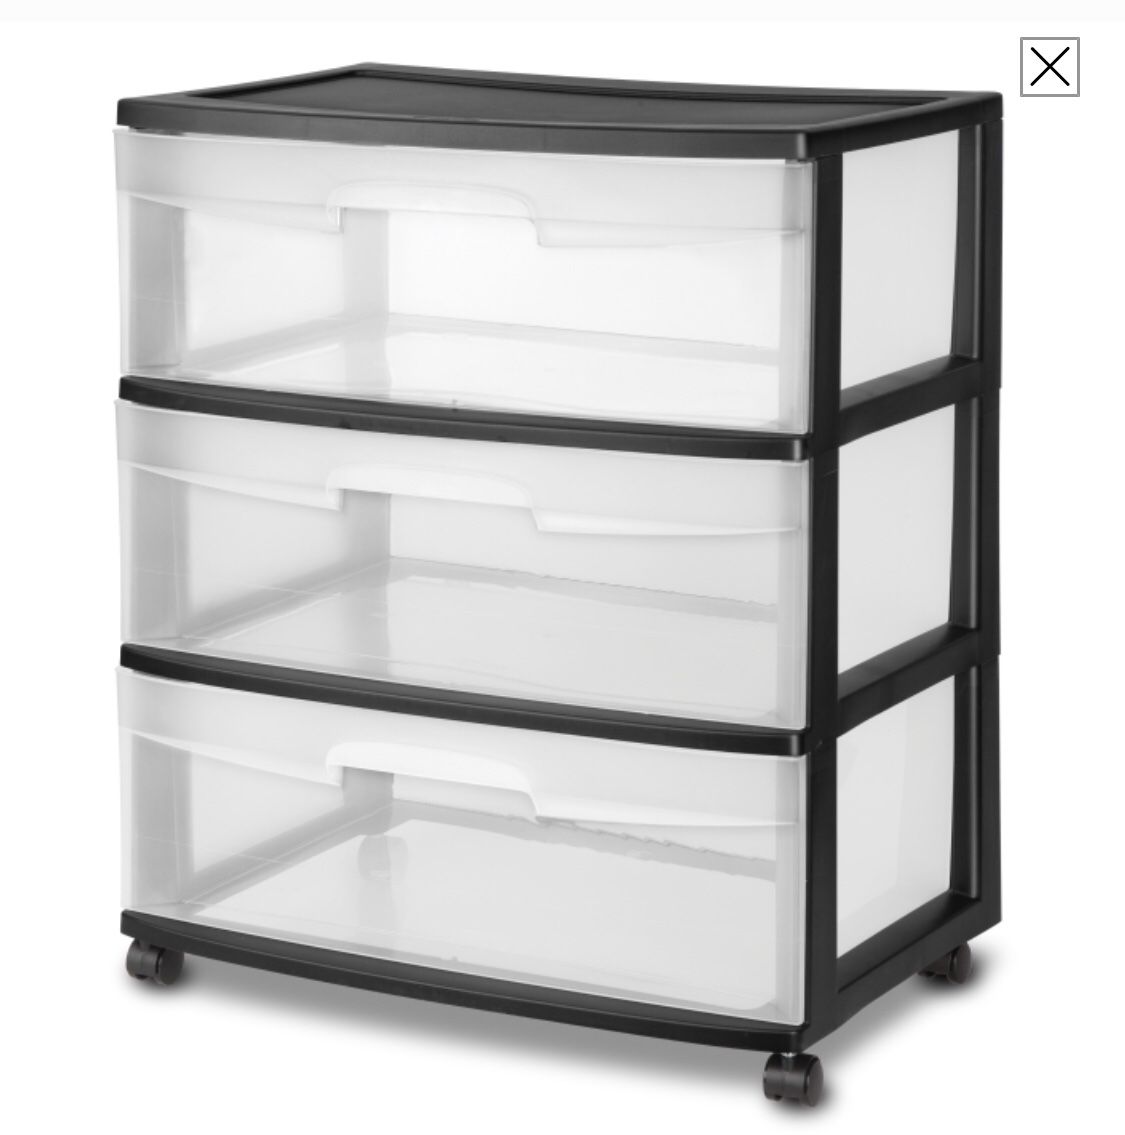 Plastic storage cabinets [2.] 1) three drawers. 2) 5 drawers